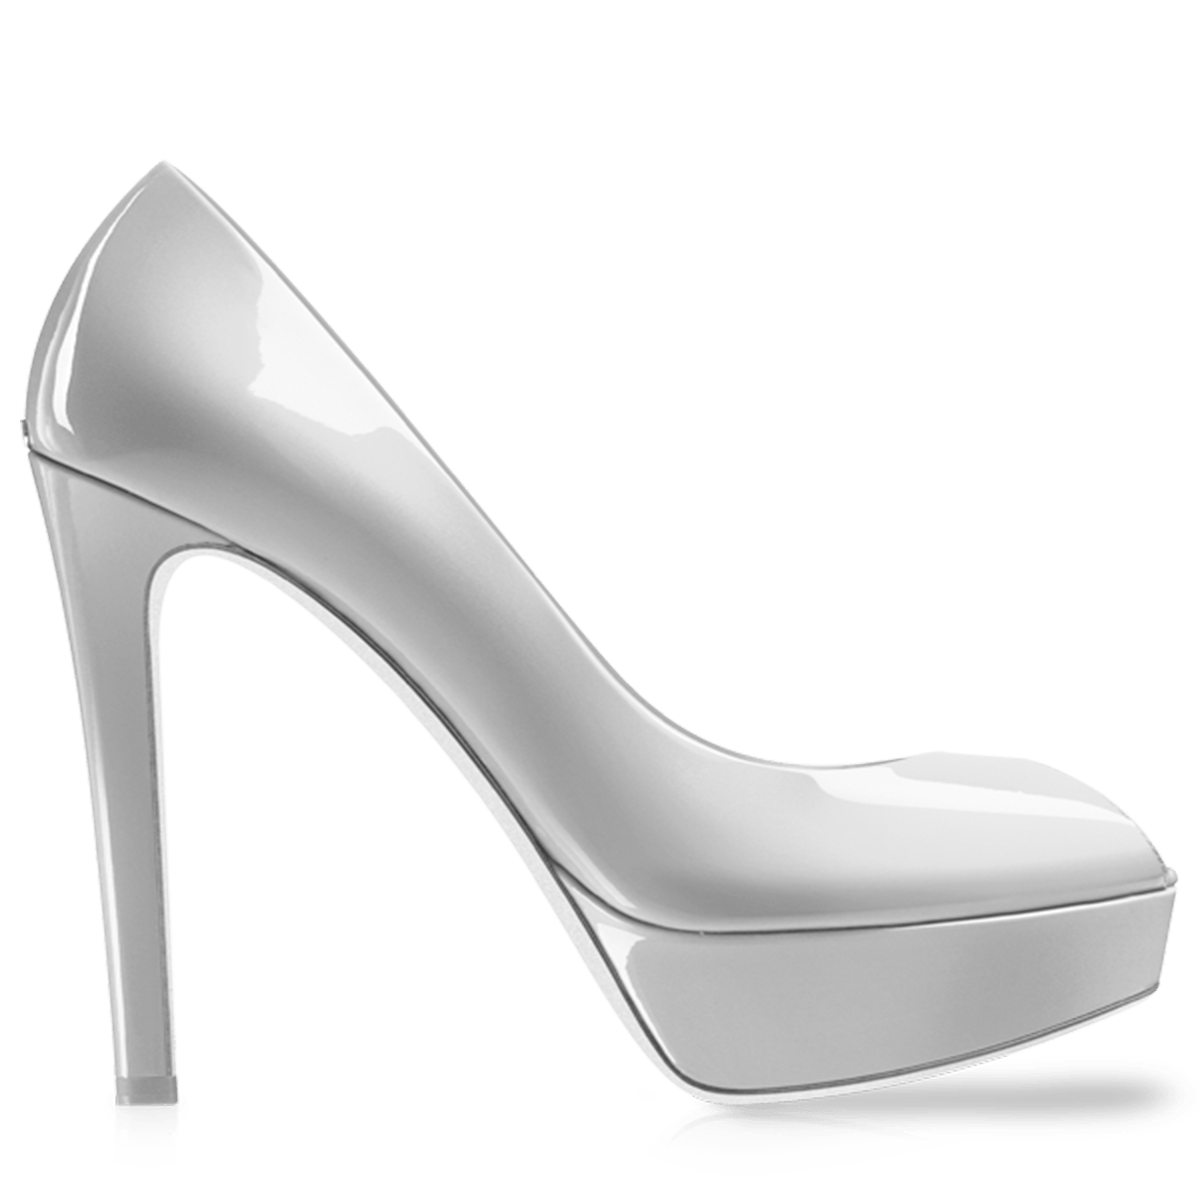 White Heel Women Shoe - High Heel Shoe Black And White, Transparent background PNG HD thumbnail